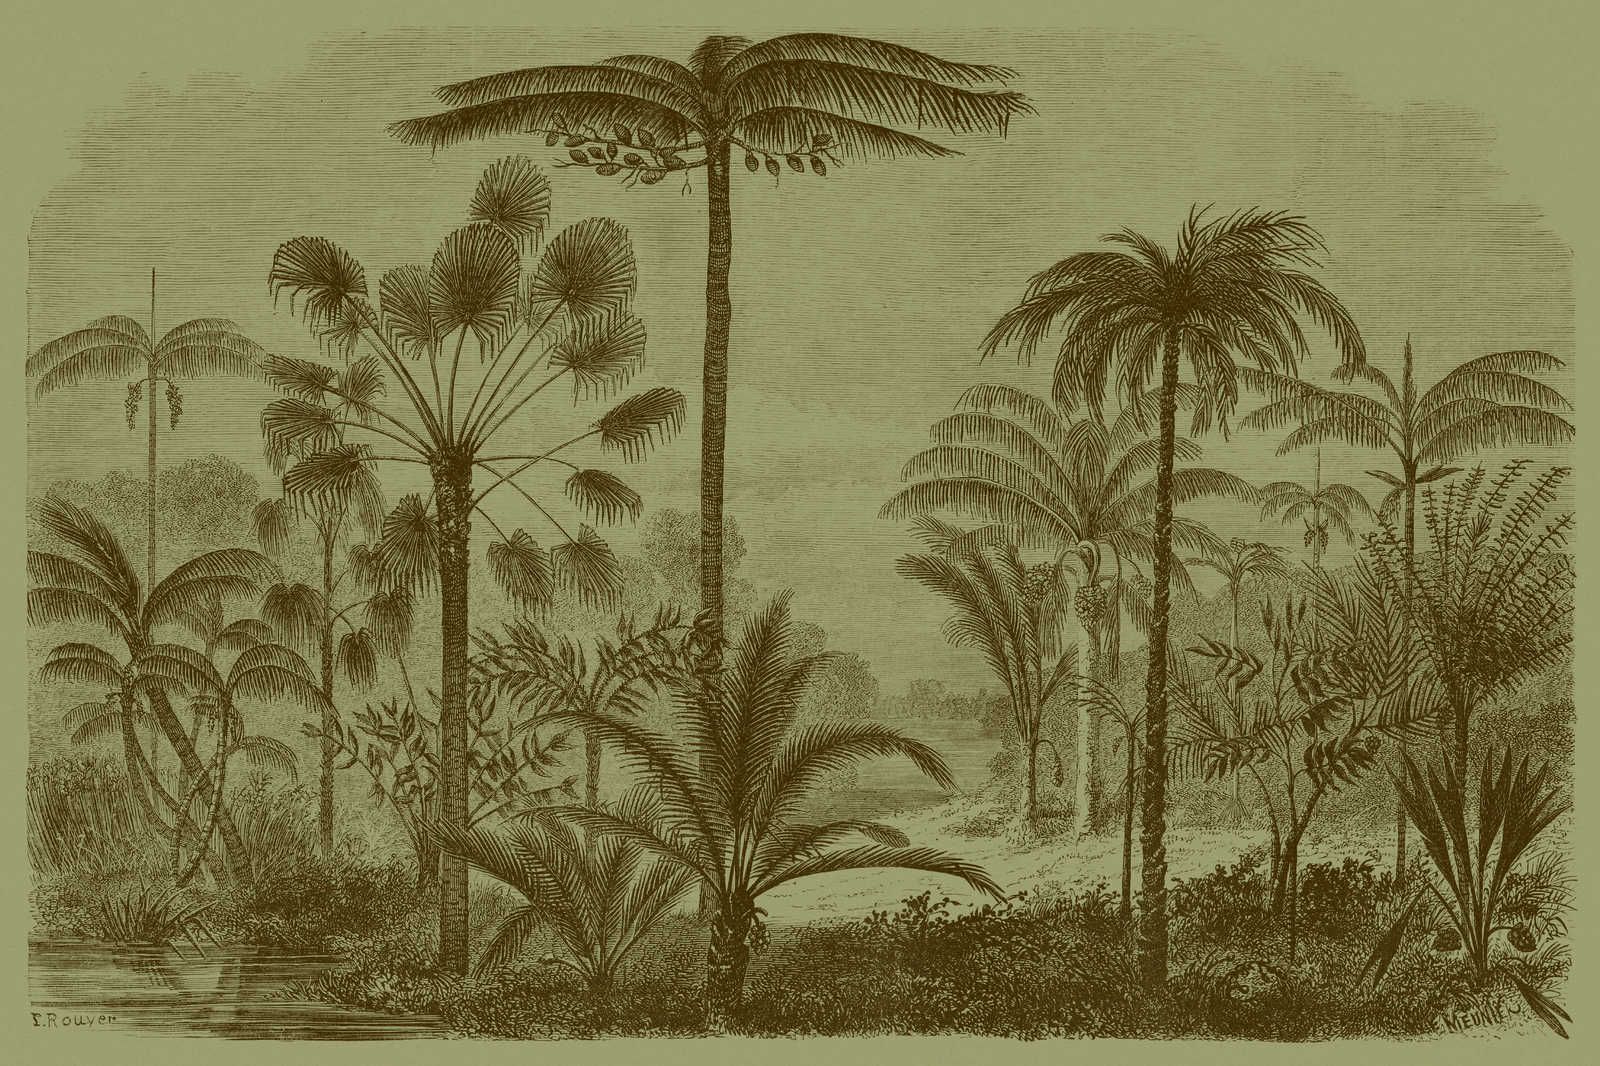             Jurassic 1 - Canvas painting Jungle motif Copperplate - 1.20 m x 0.80 m
        